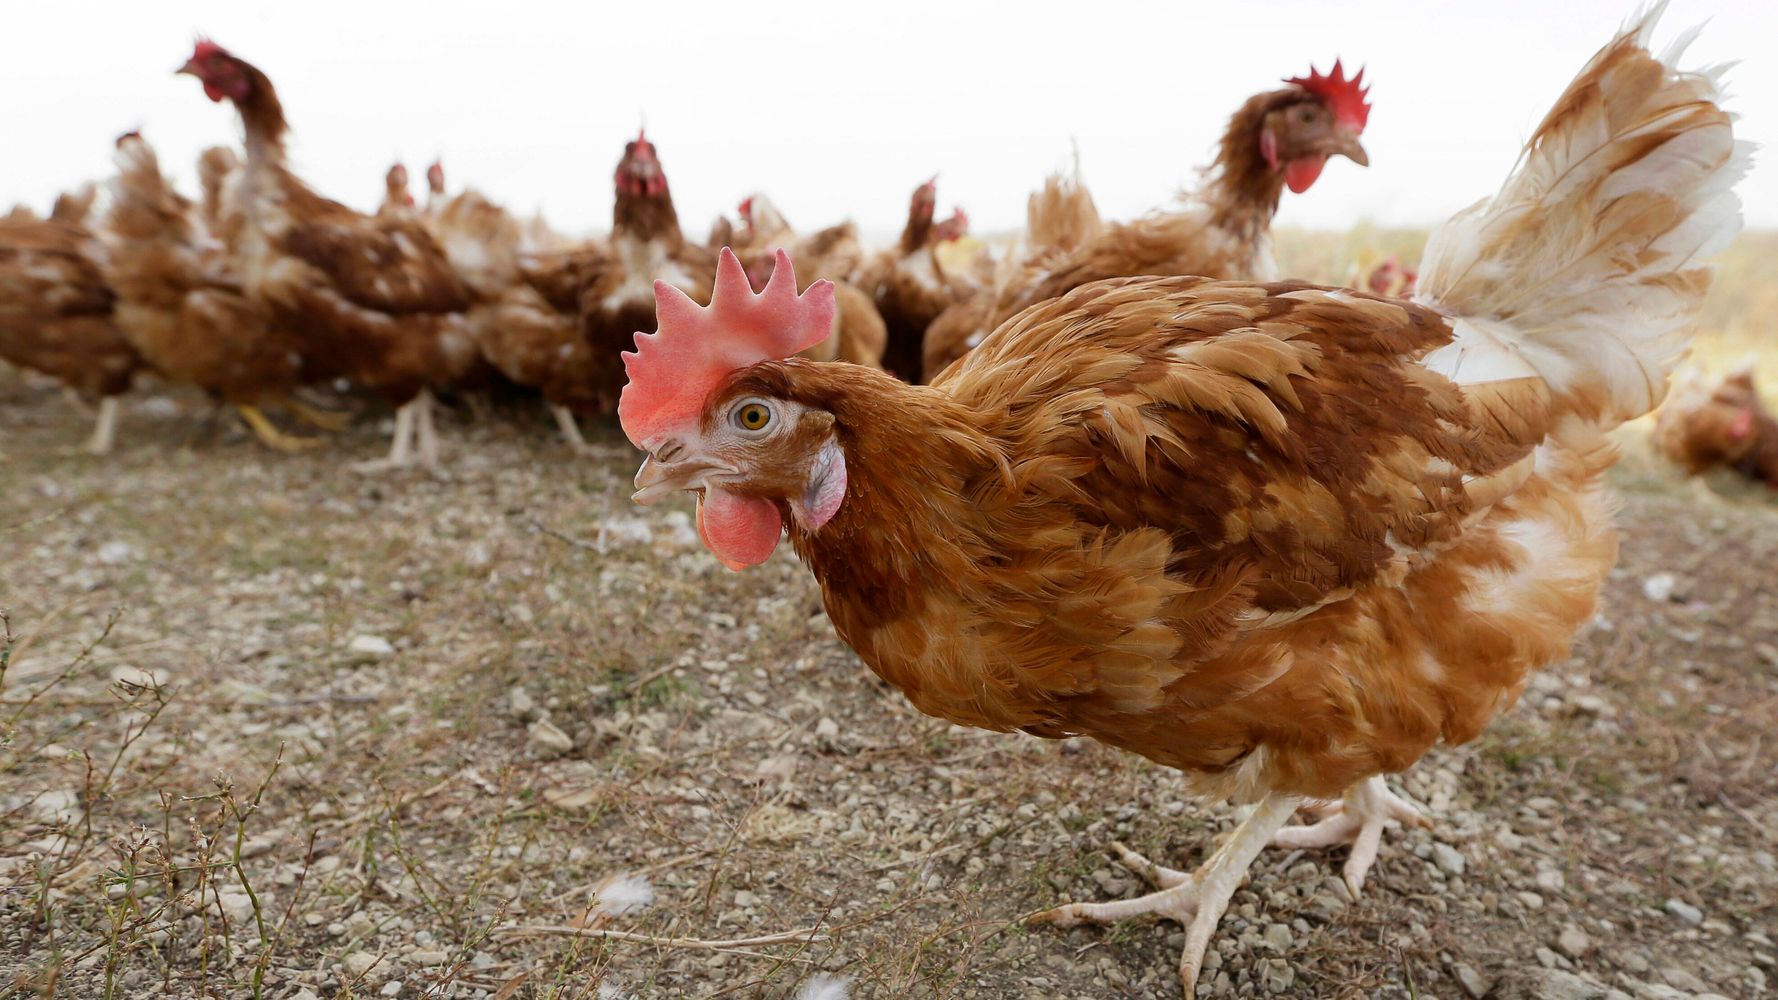 5,3 милиона пилета са убити в Айова заради епидемия от птичи грип